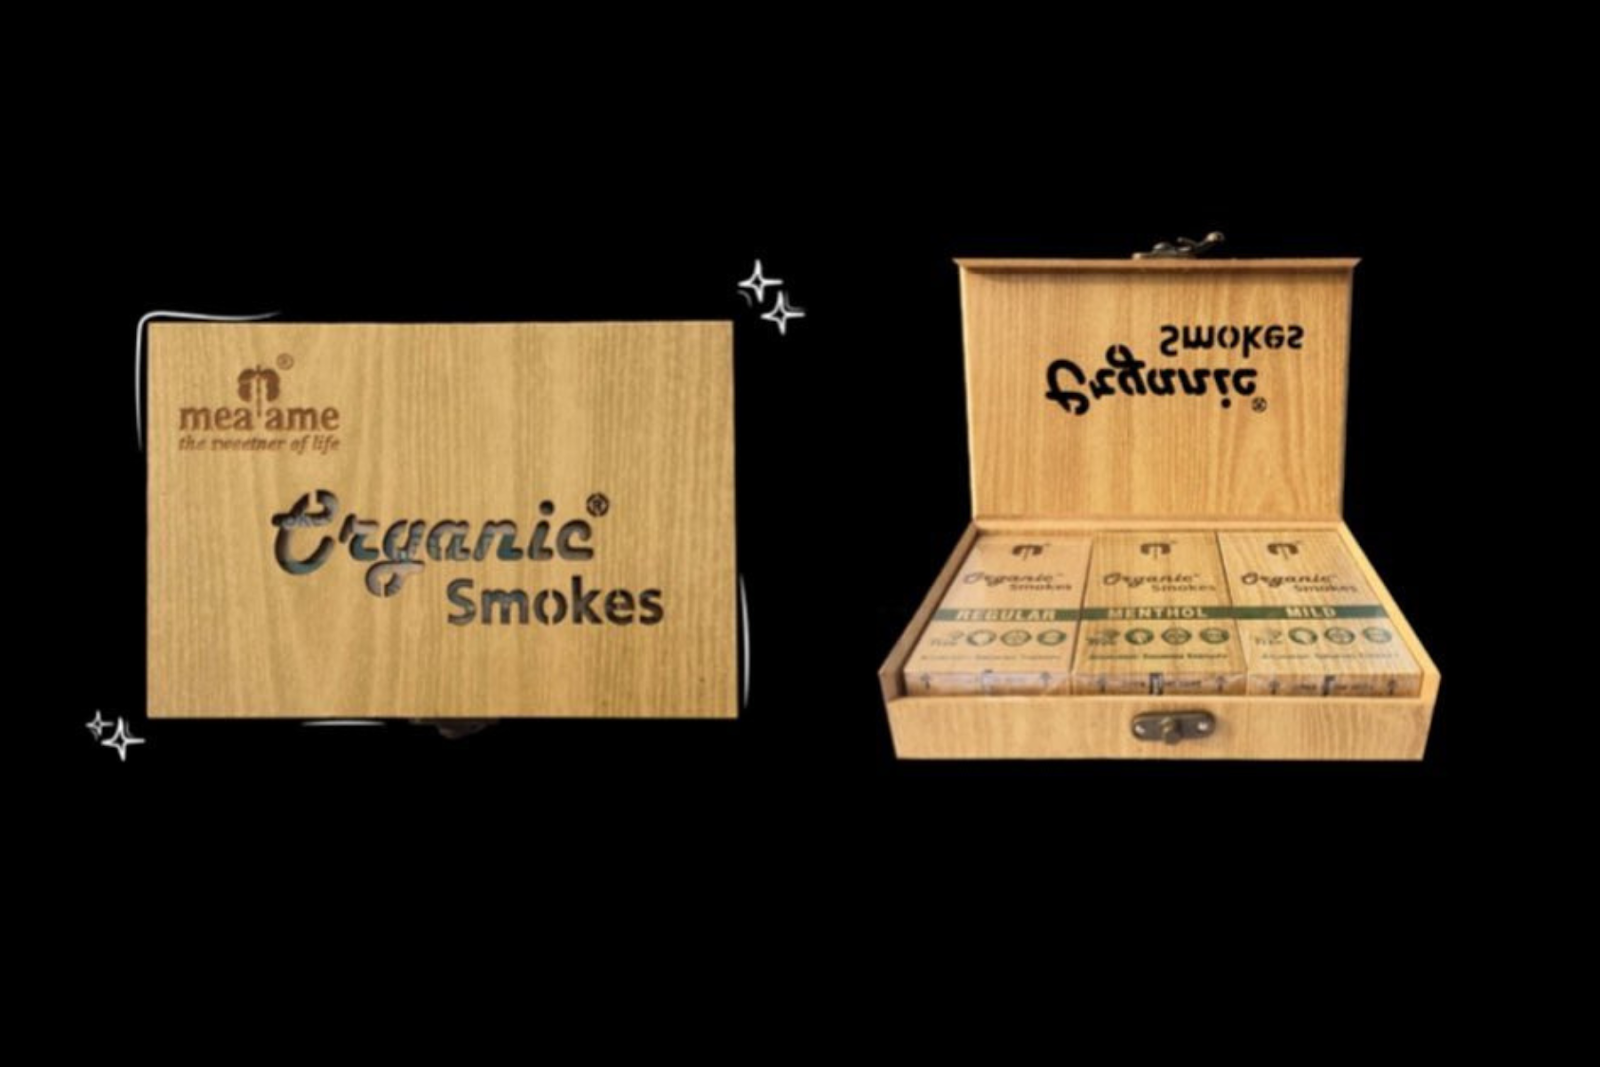 Organic smokes mild
herbal cigarettes